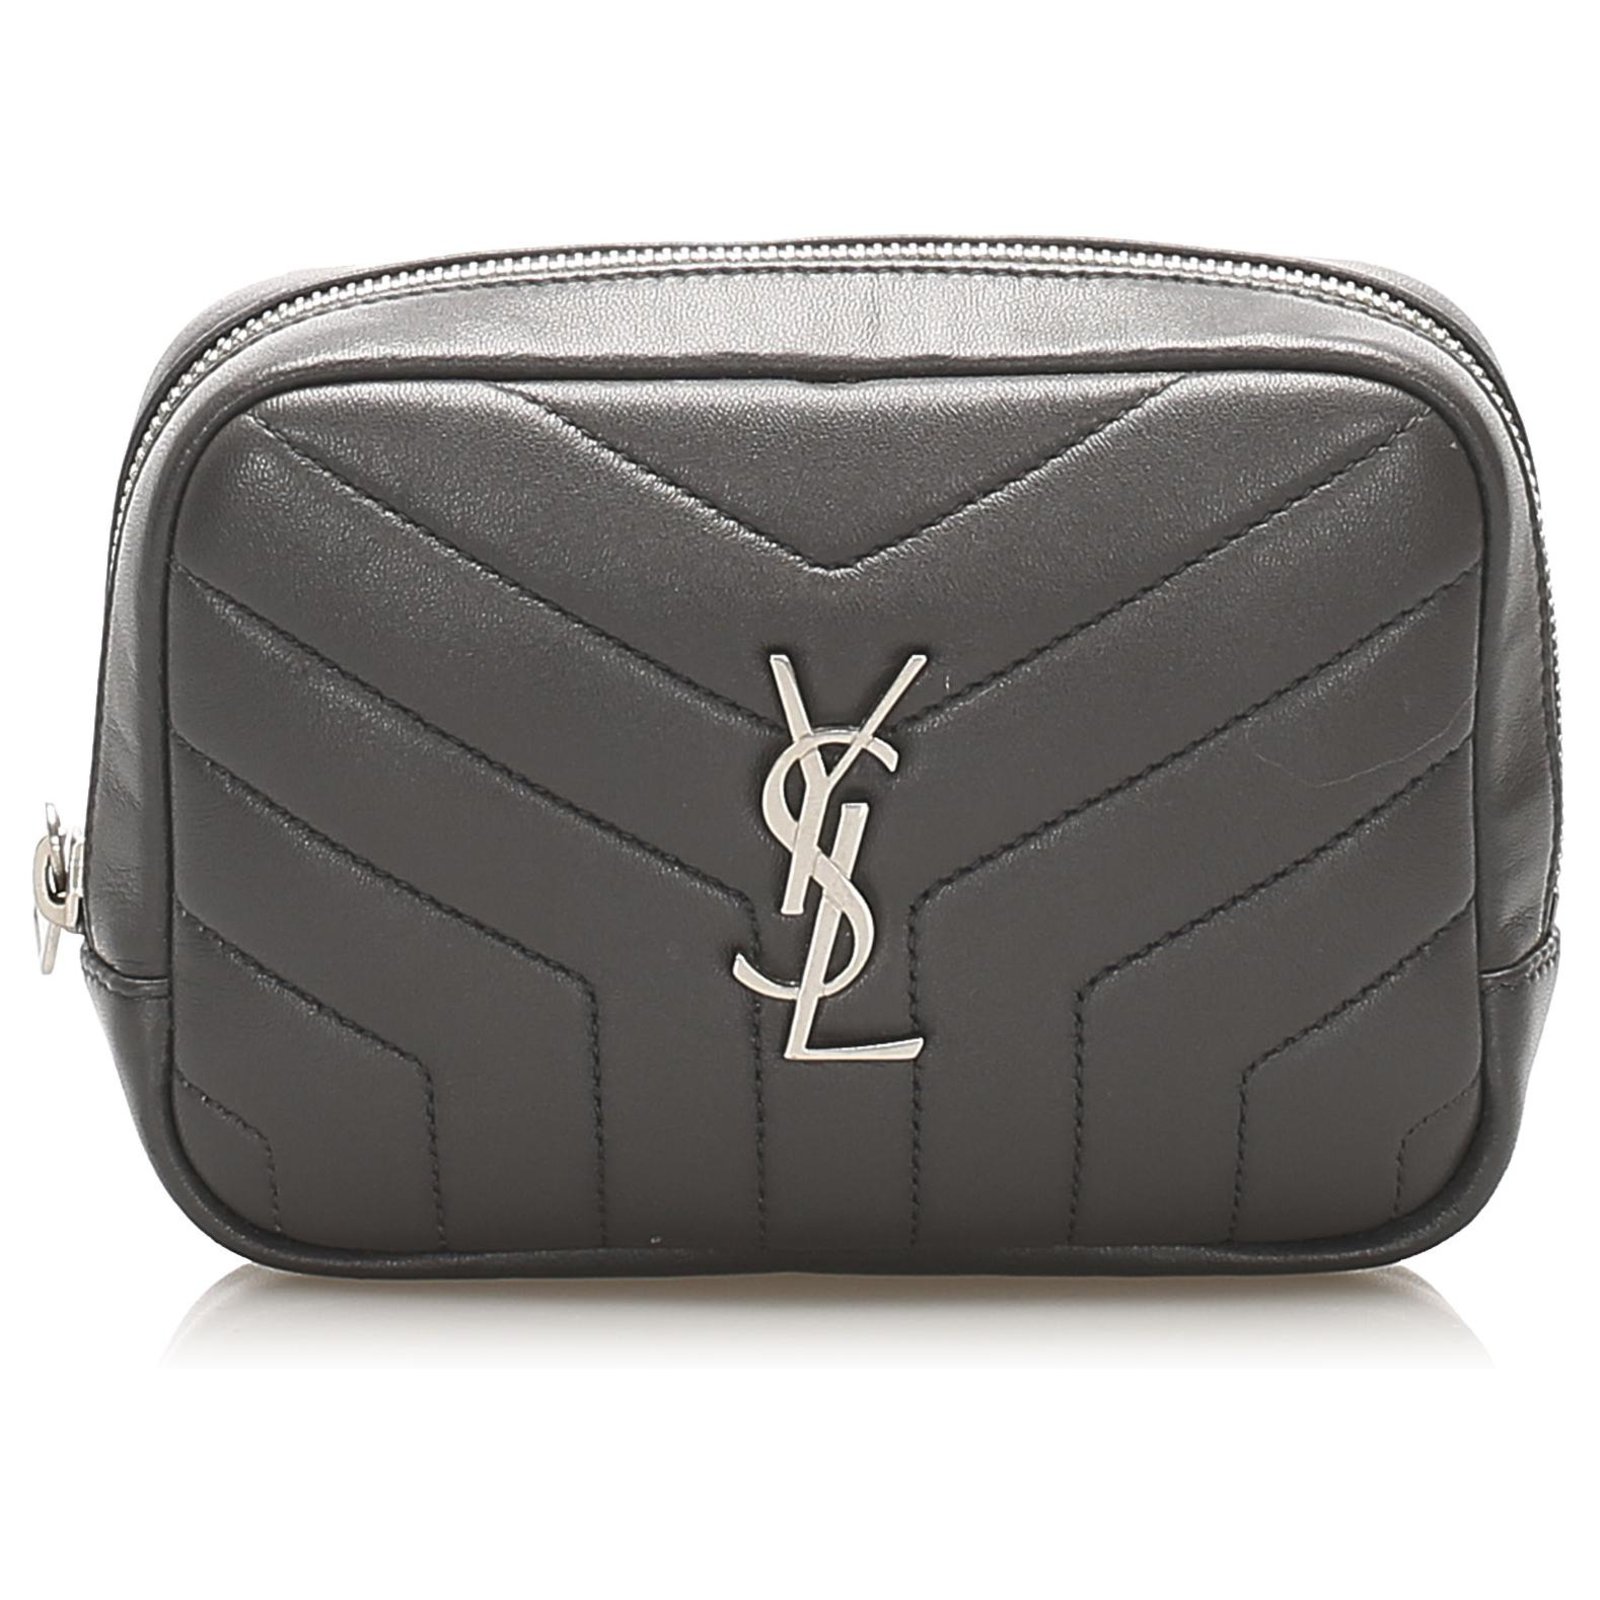 Yves Saint Laurent Monogram Leather Pouch Grey